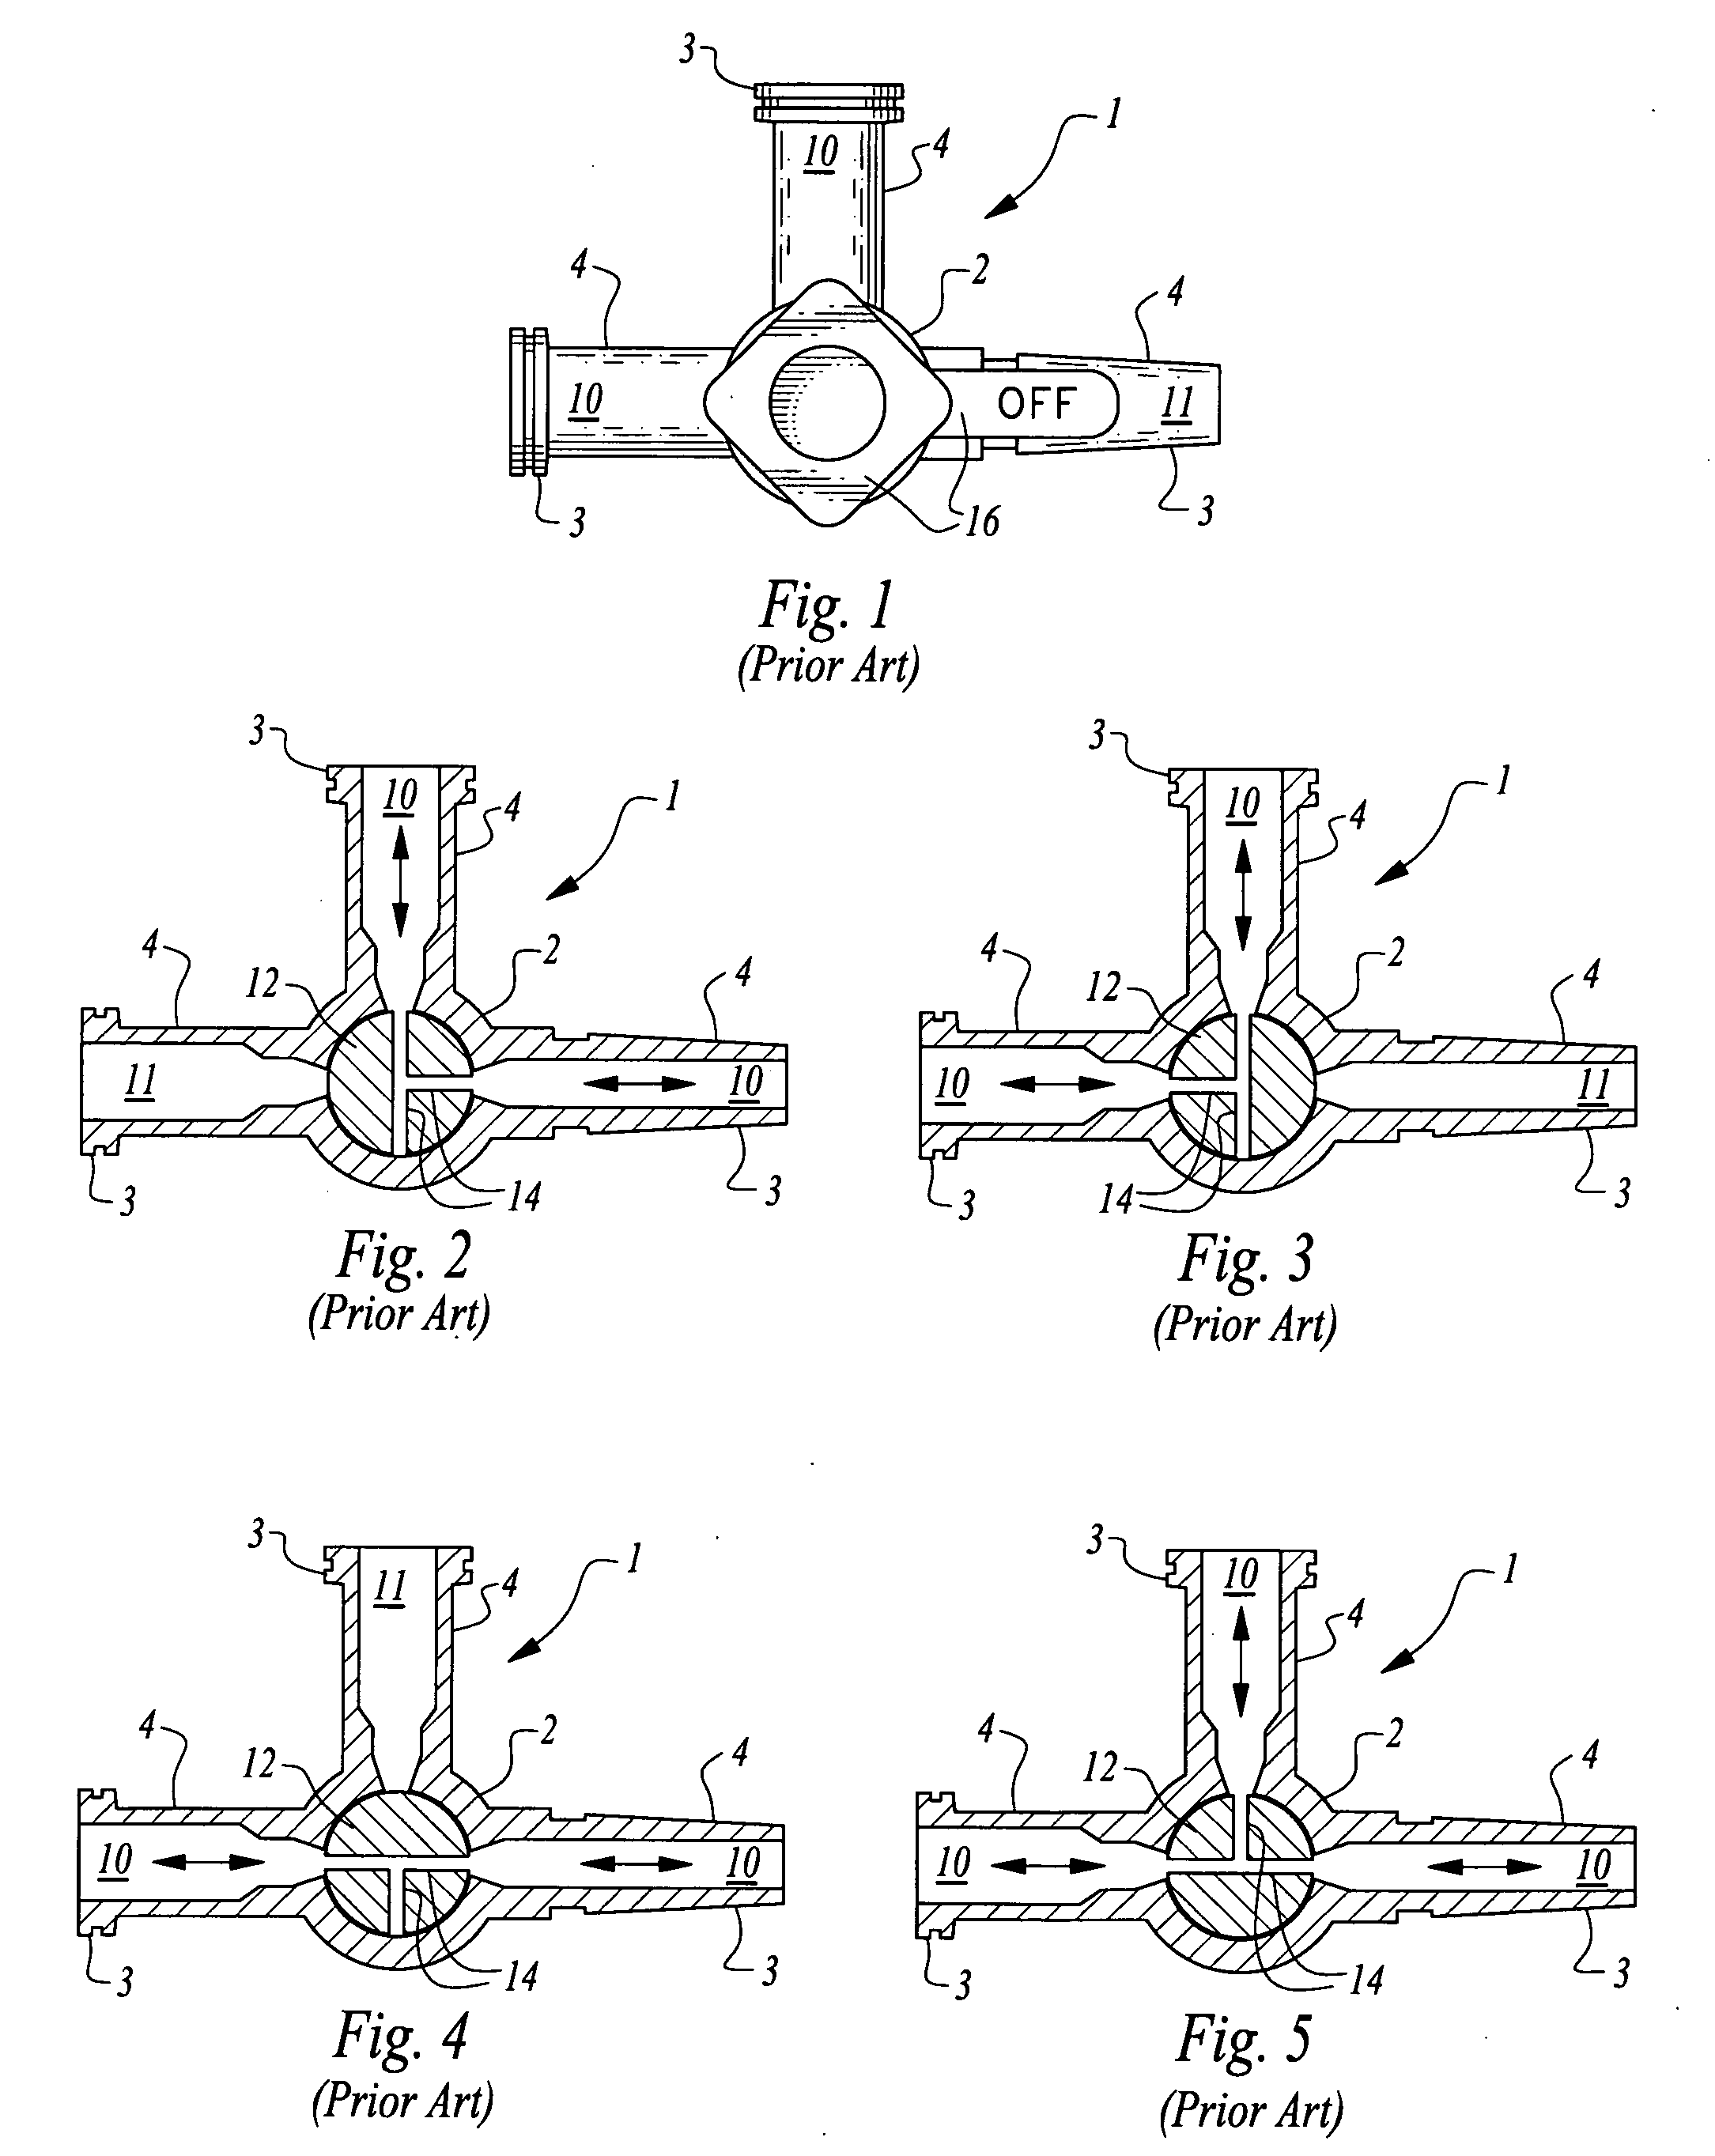 Multi-port stopcock valve and flow designating system